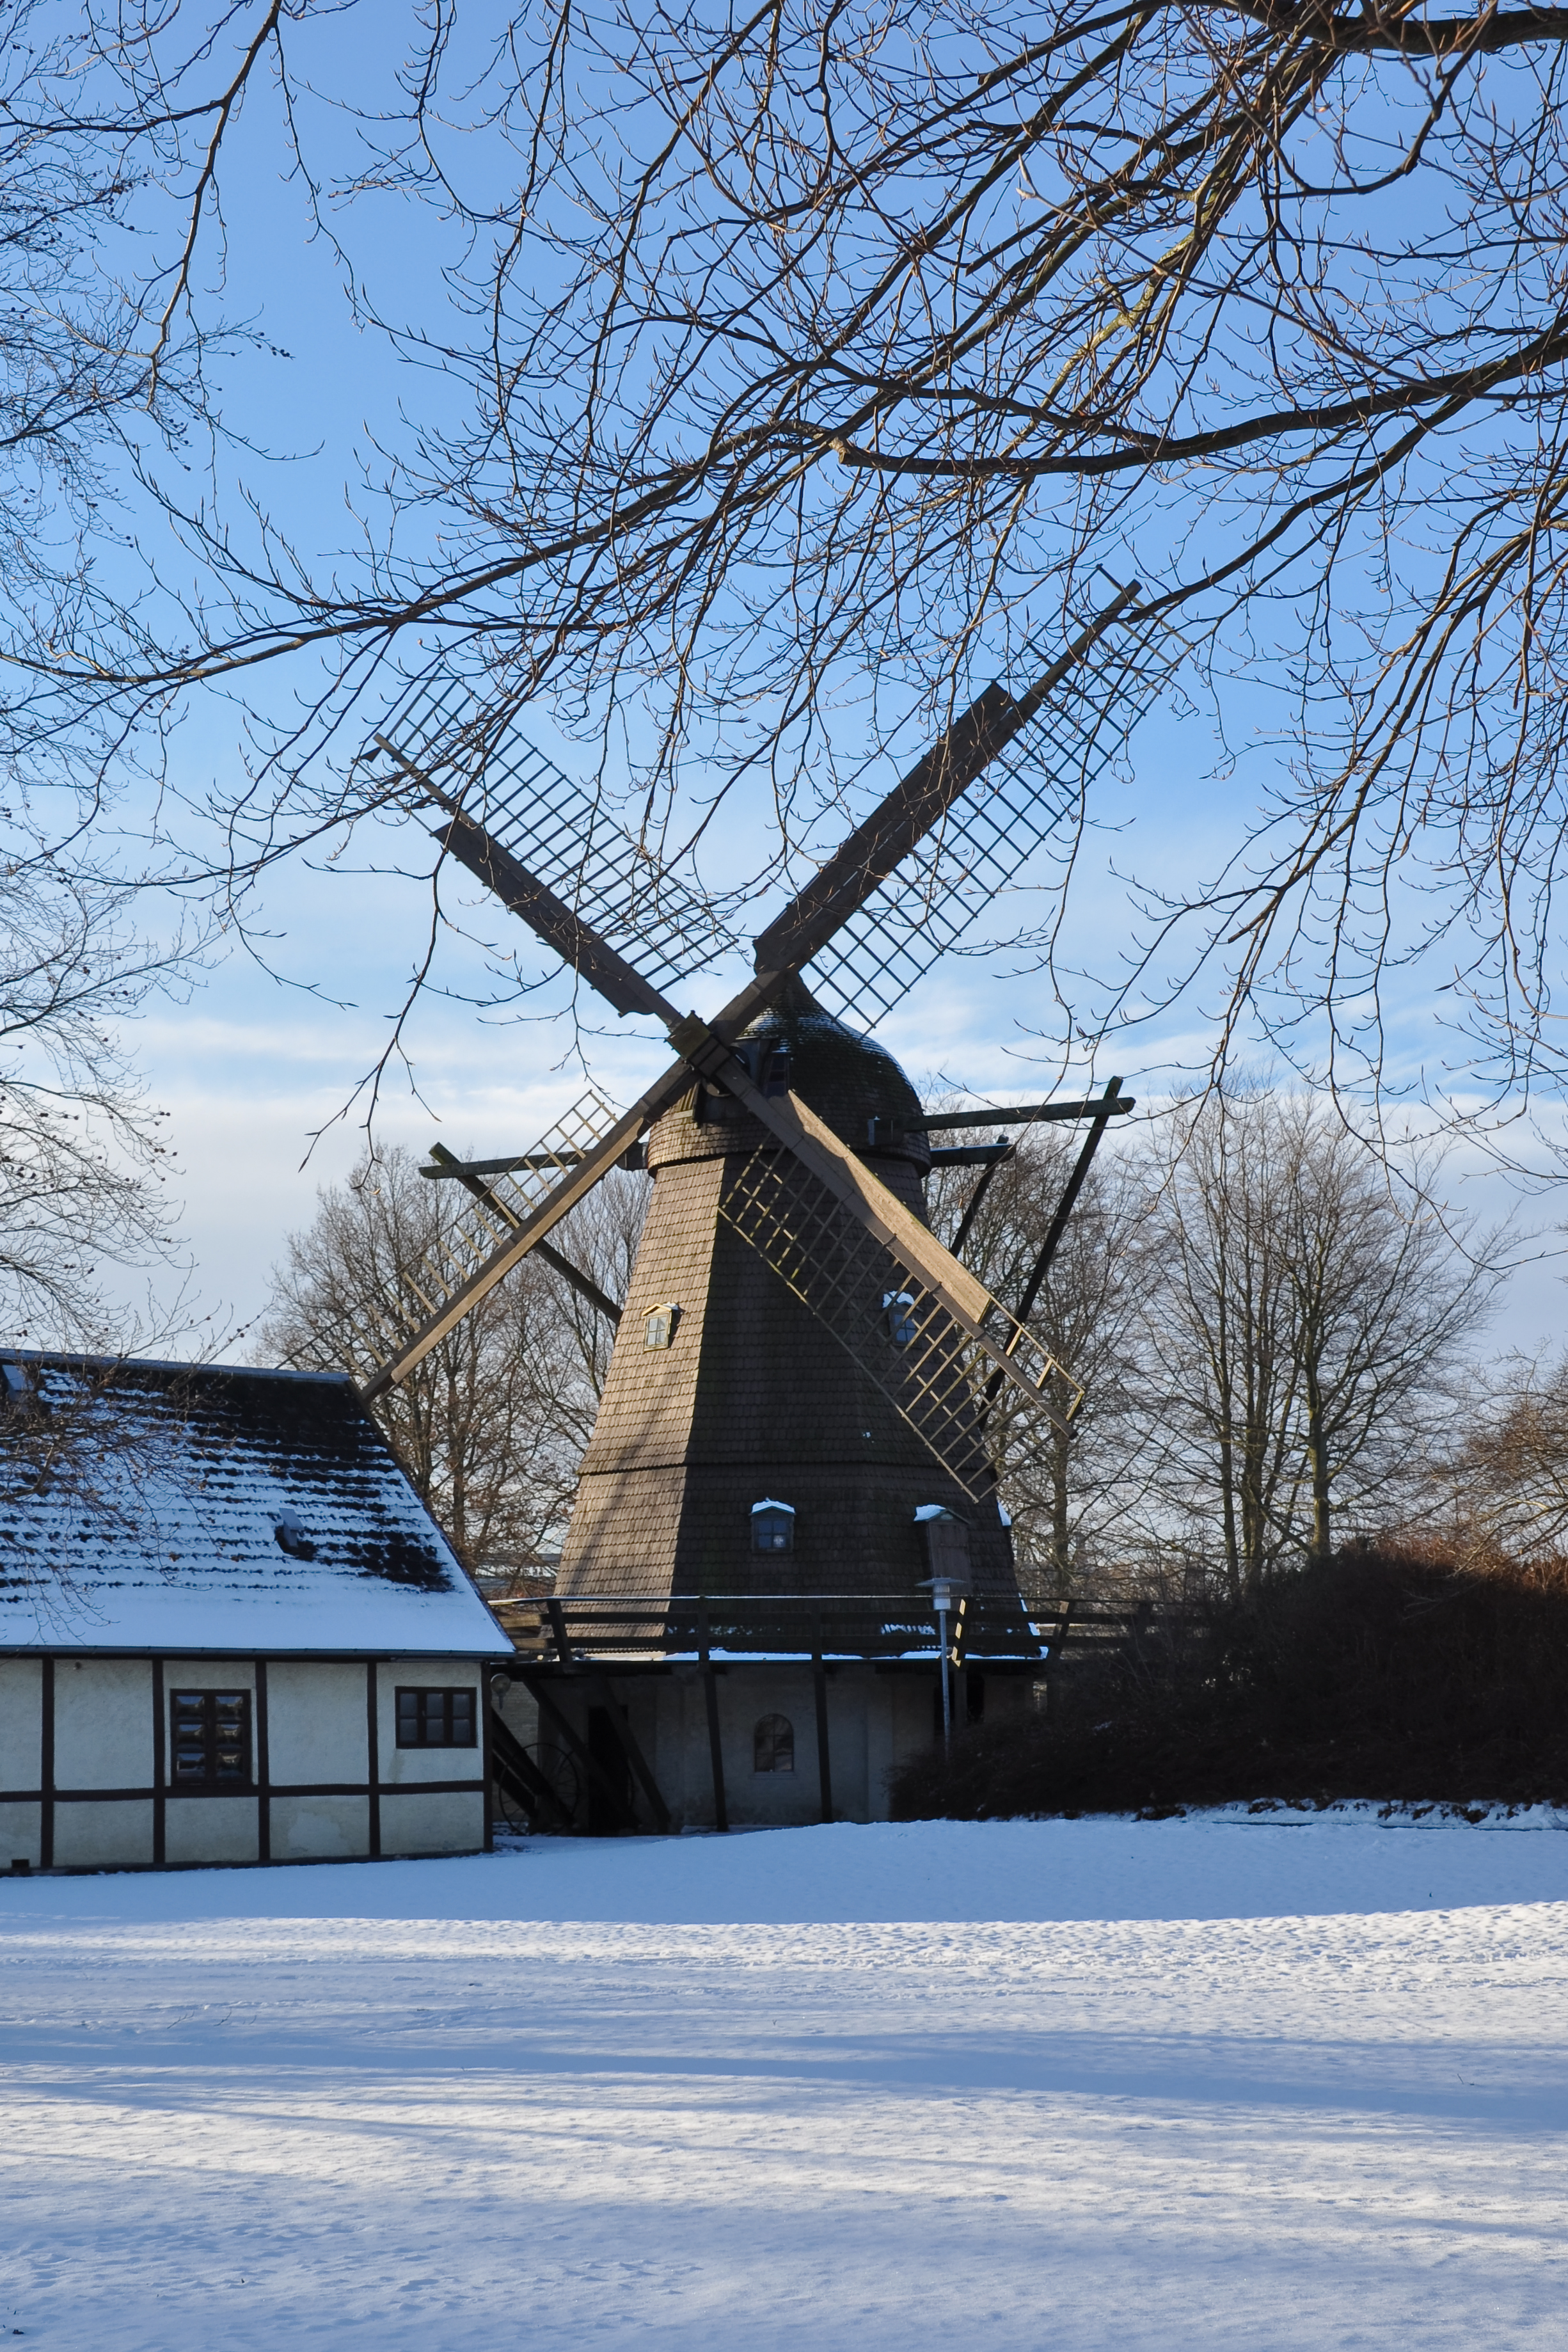 Brøndbyvester Windmill, Denmark, 2017-02-11